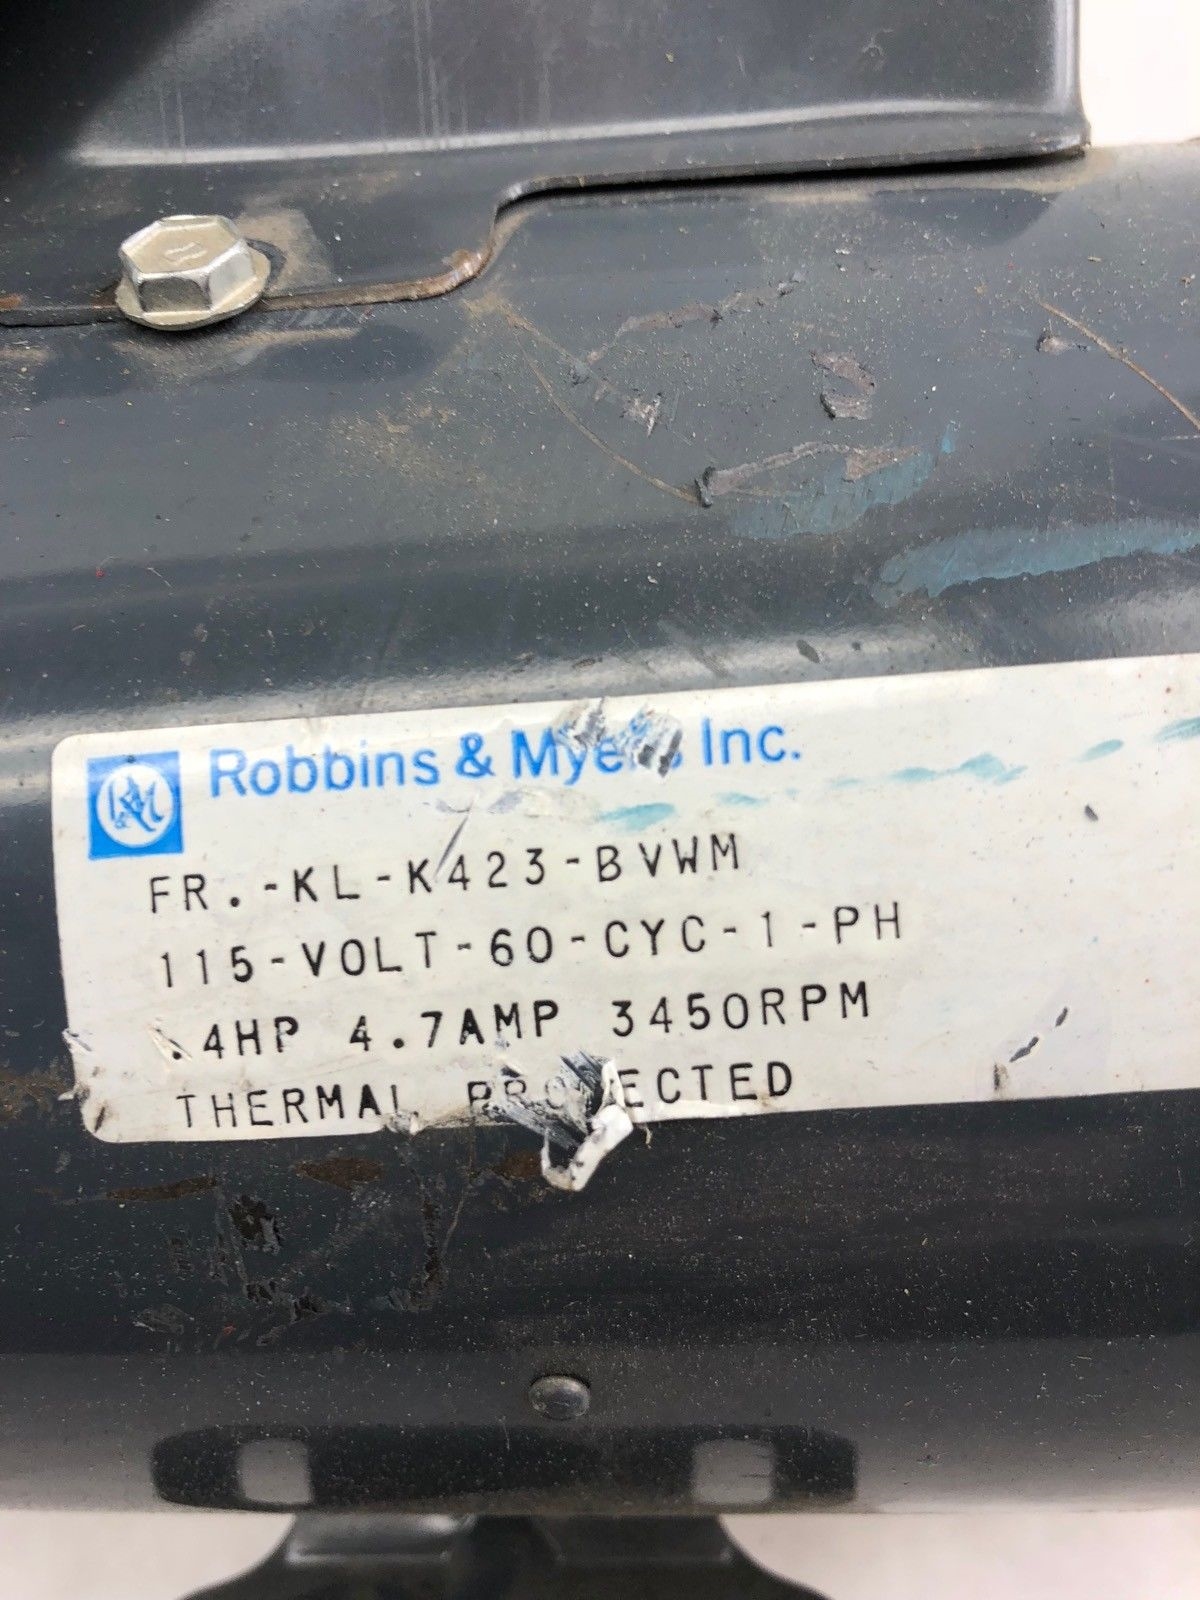 USED ROBBINS & MYERS .4 HP 4